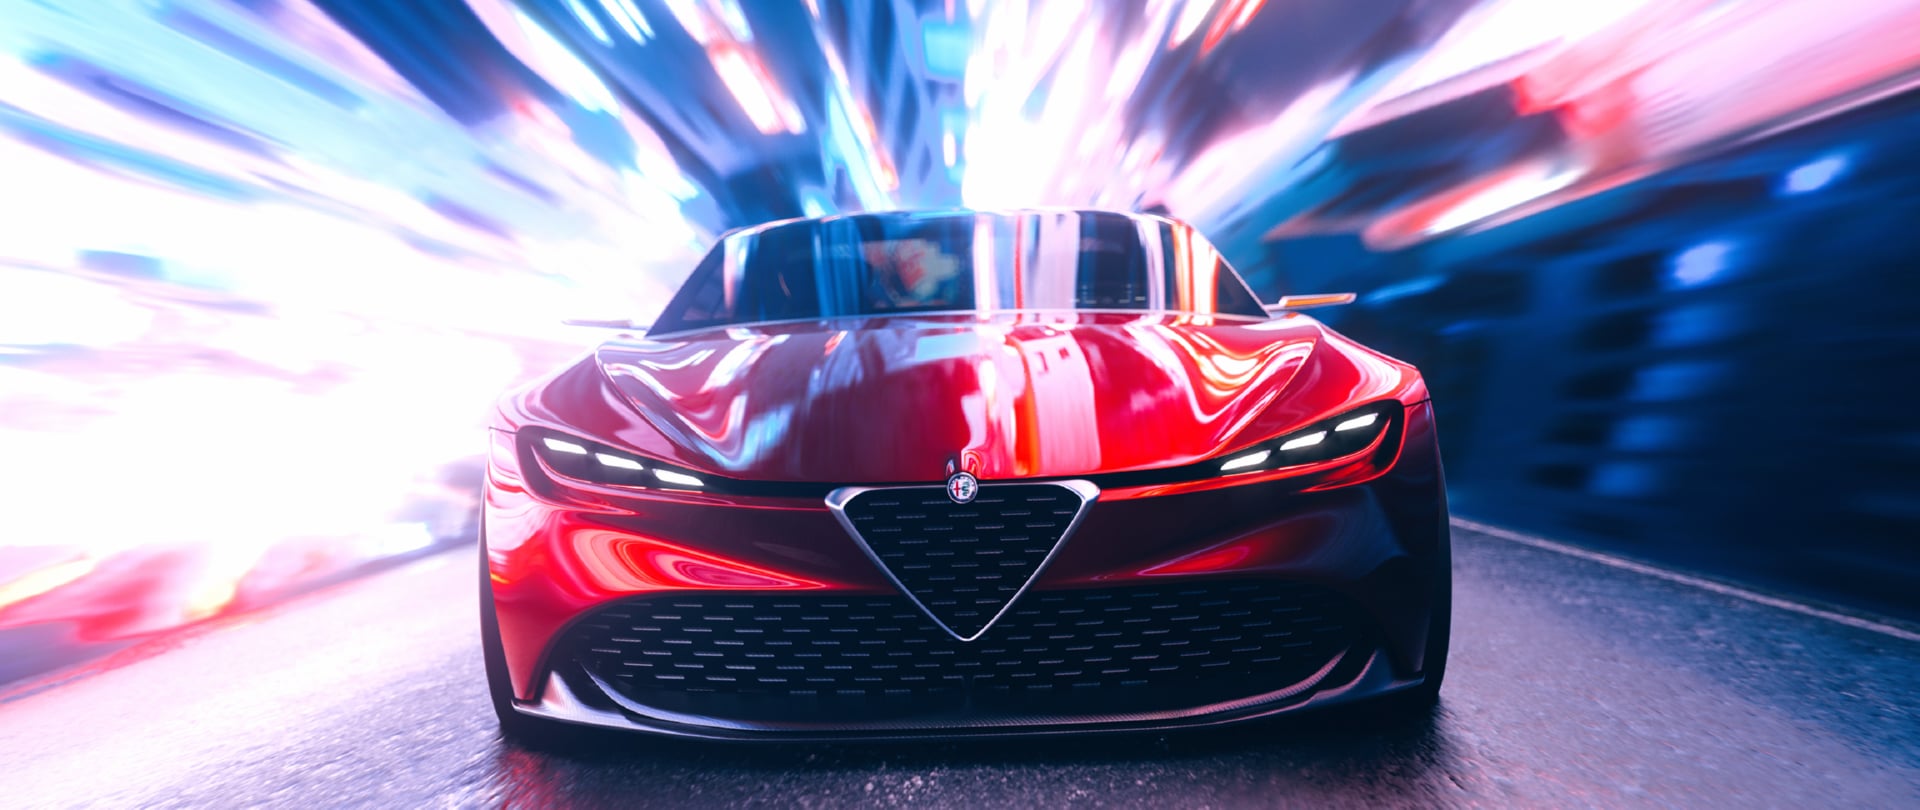 Alfa Romeo Zagato at 1024 x 768 size wallpapers HD quality